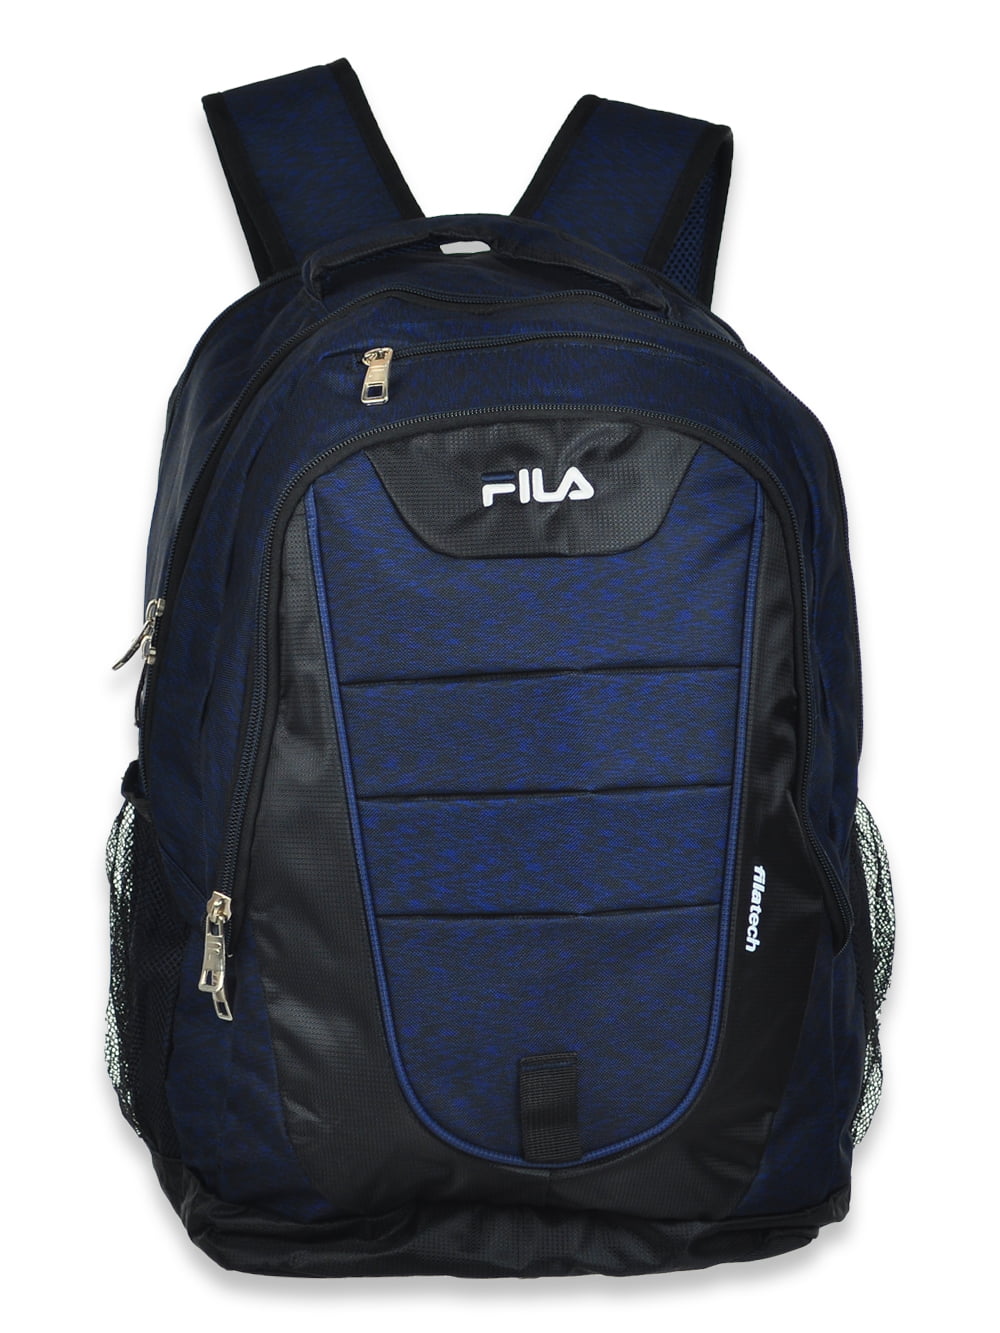 Fila Osiris Backpack - blue, one size - Walmart.com